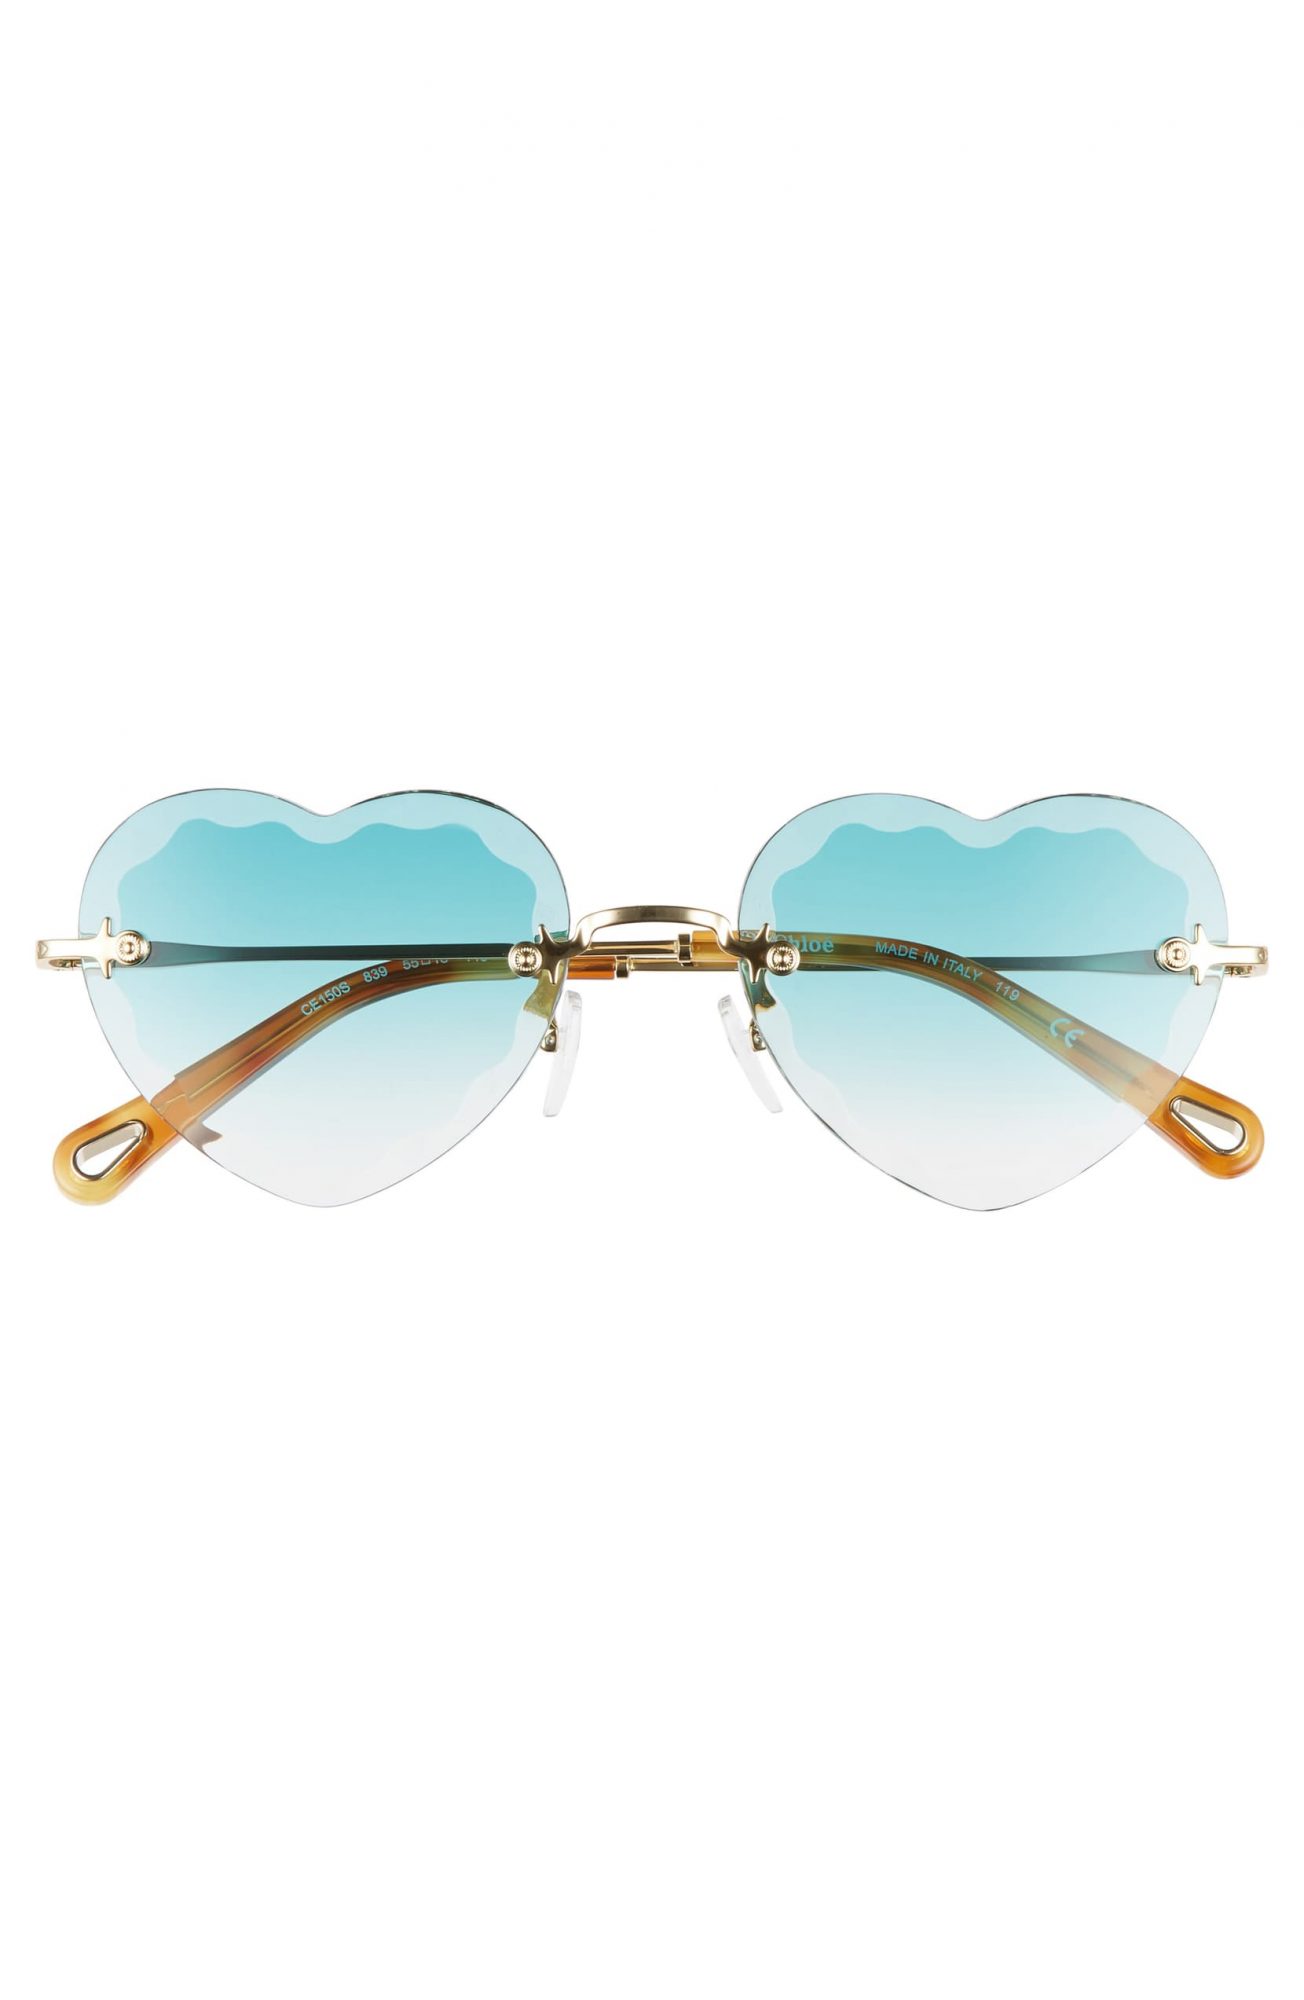 Chloe heart-shaped sunglasses